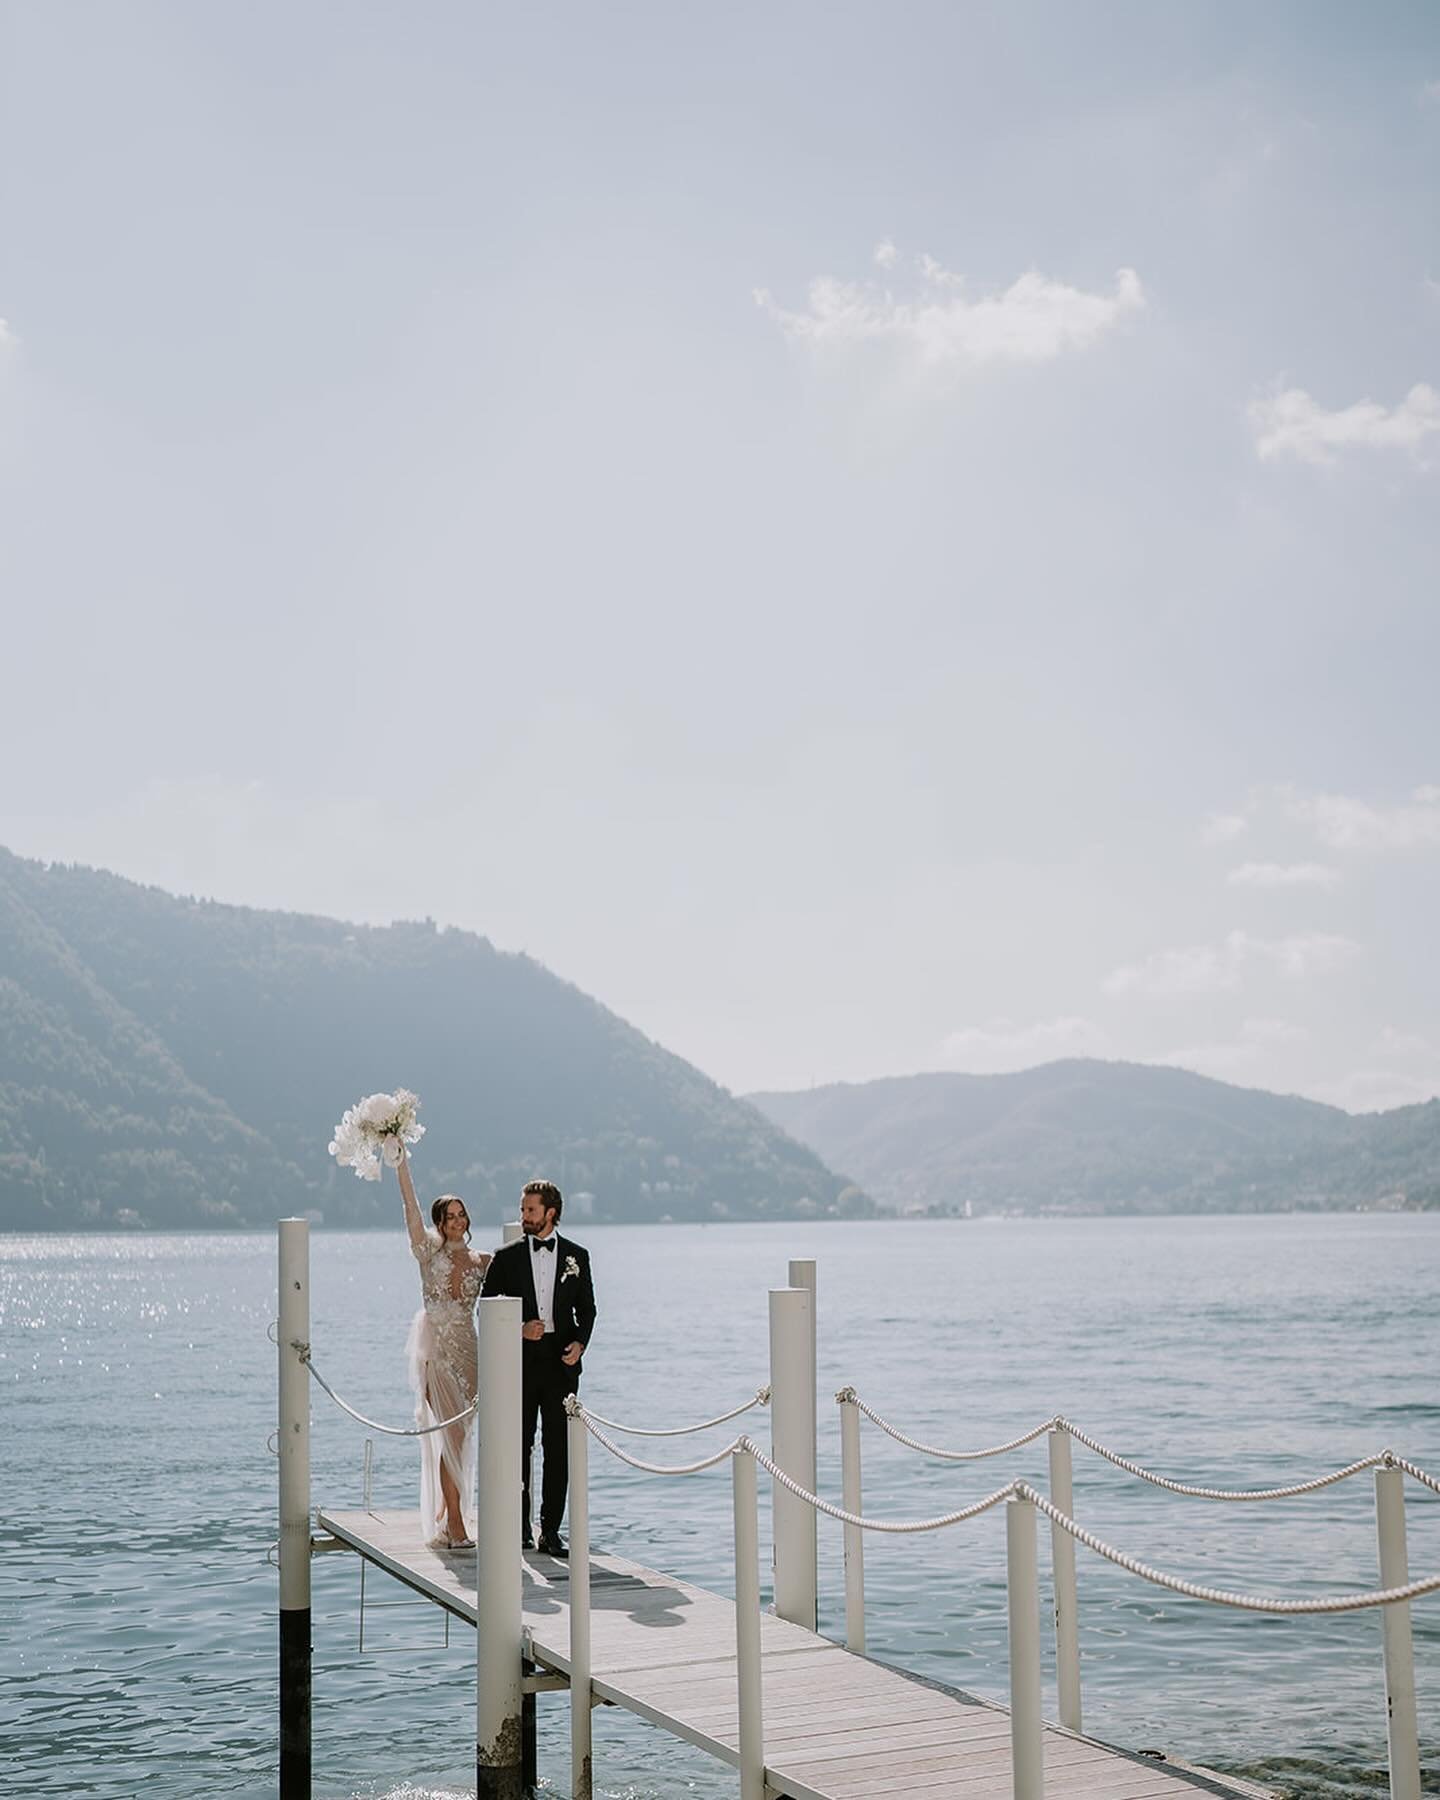 Lake Como on film and digital. Can&rsquo;t wait to be back there soon! 

@villapizzo 
Lake Como wedding photographer // Villa Pizzo

#lakecomowedding #lakecomoweddingphotographer #destinationweddingphotographer #villapizzowedding #lakegardawedding #w